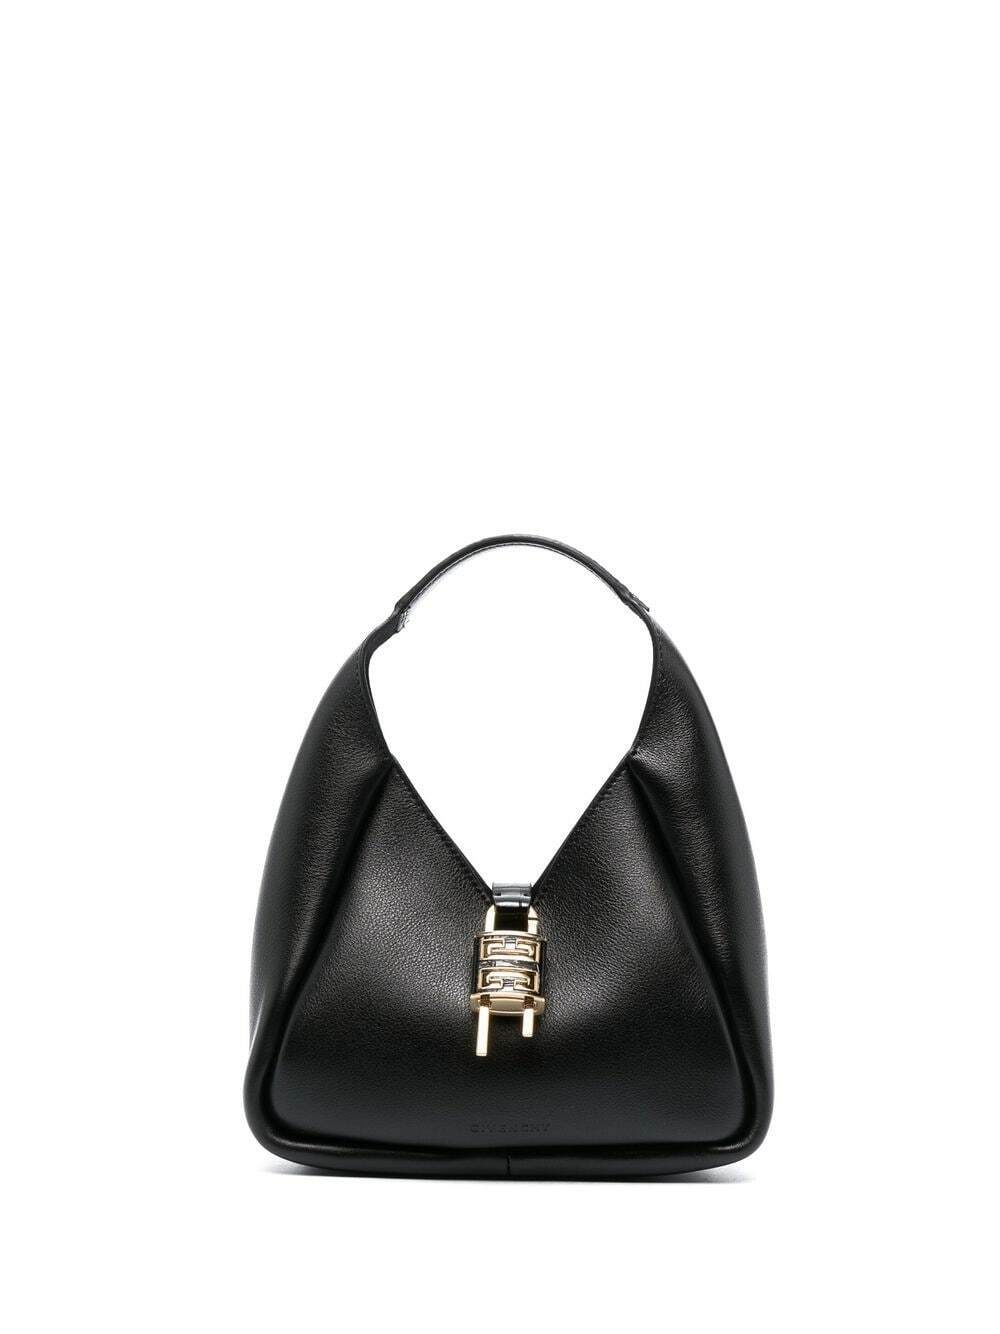 GIVENCHY - G-hobo Mini Leather Shoulder Bag Givenchy